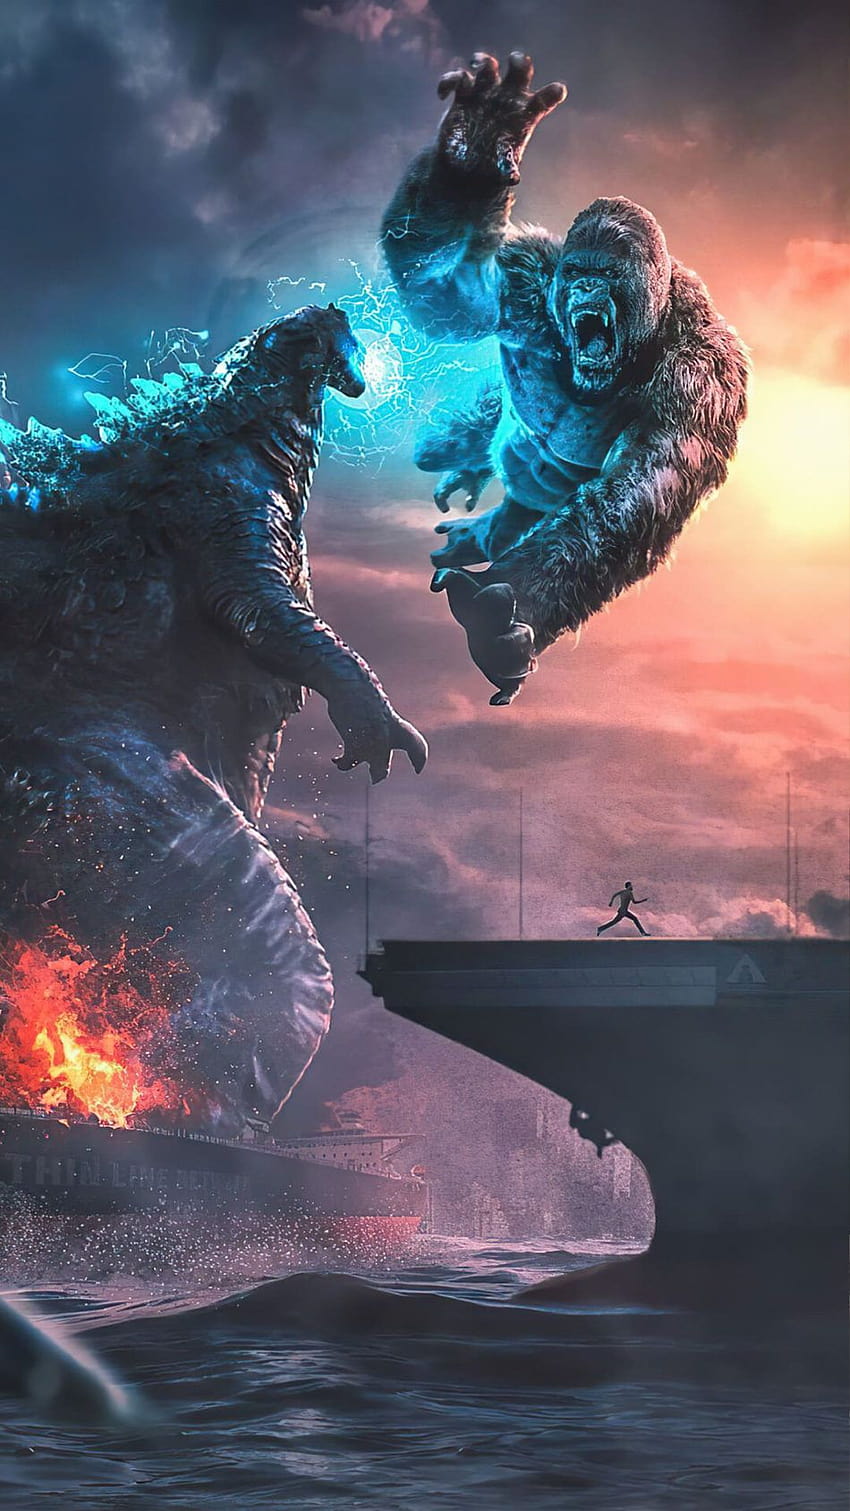 Godzilla Vs Kong Fighting Ultra Mobile en 2021, king kong vs godzilla iphone fondo de pantalla del teléfono